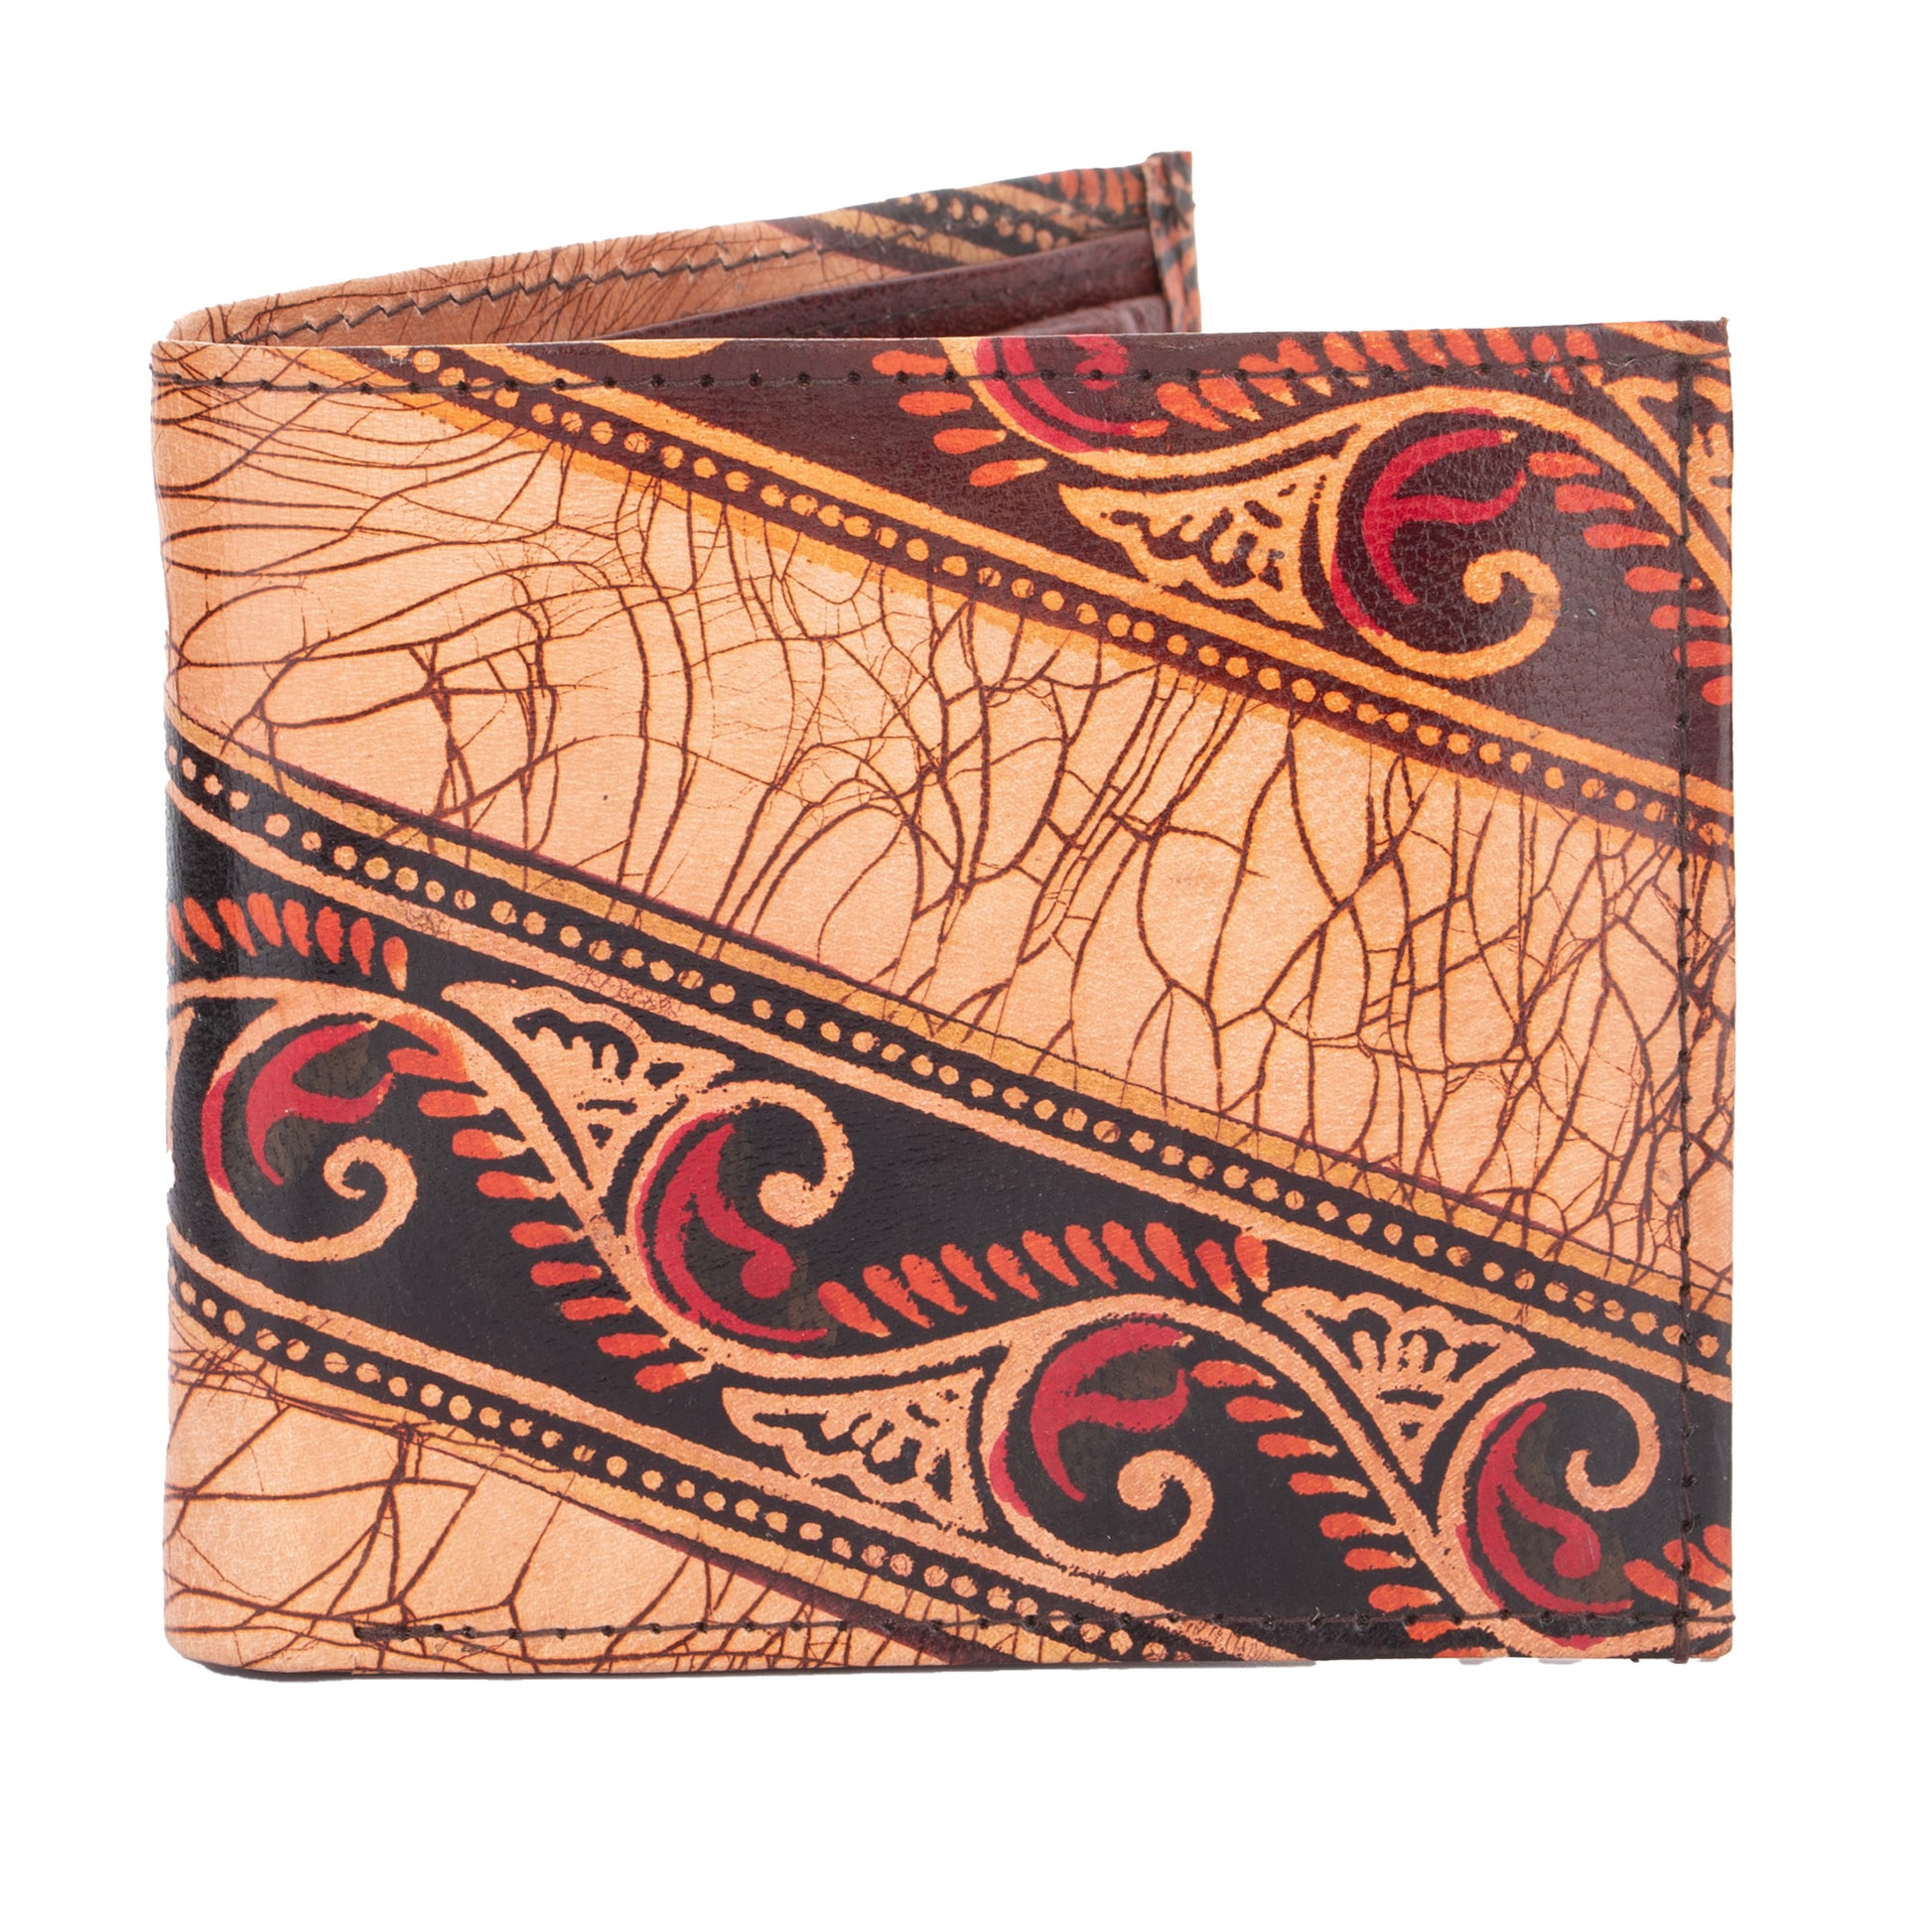 shantiniketan-pure-leather-printed-men-s-wallet-w04